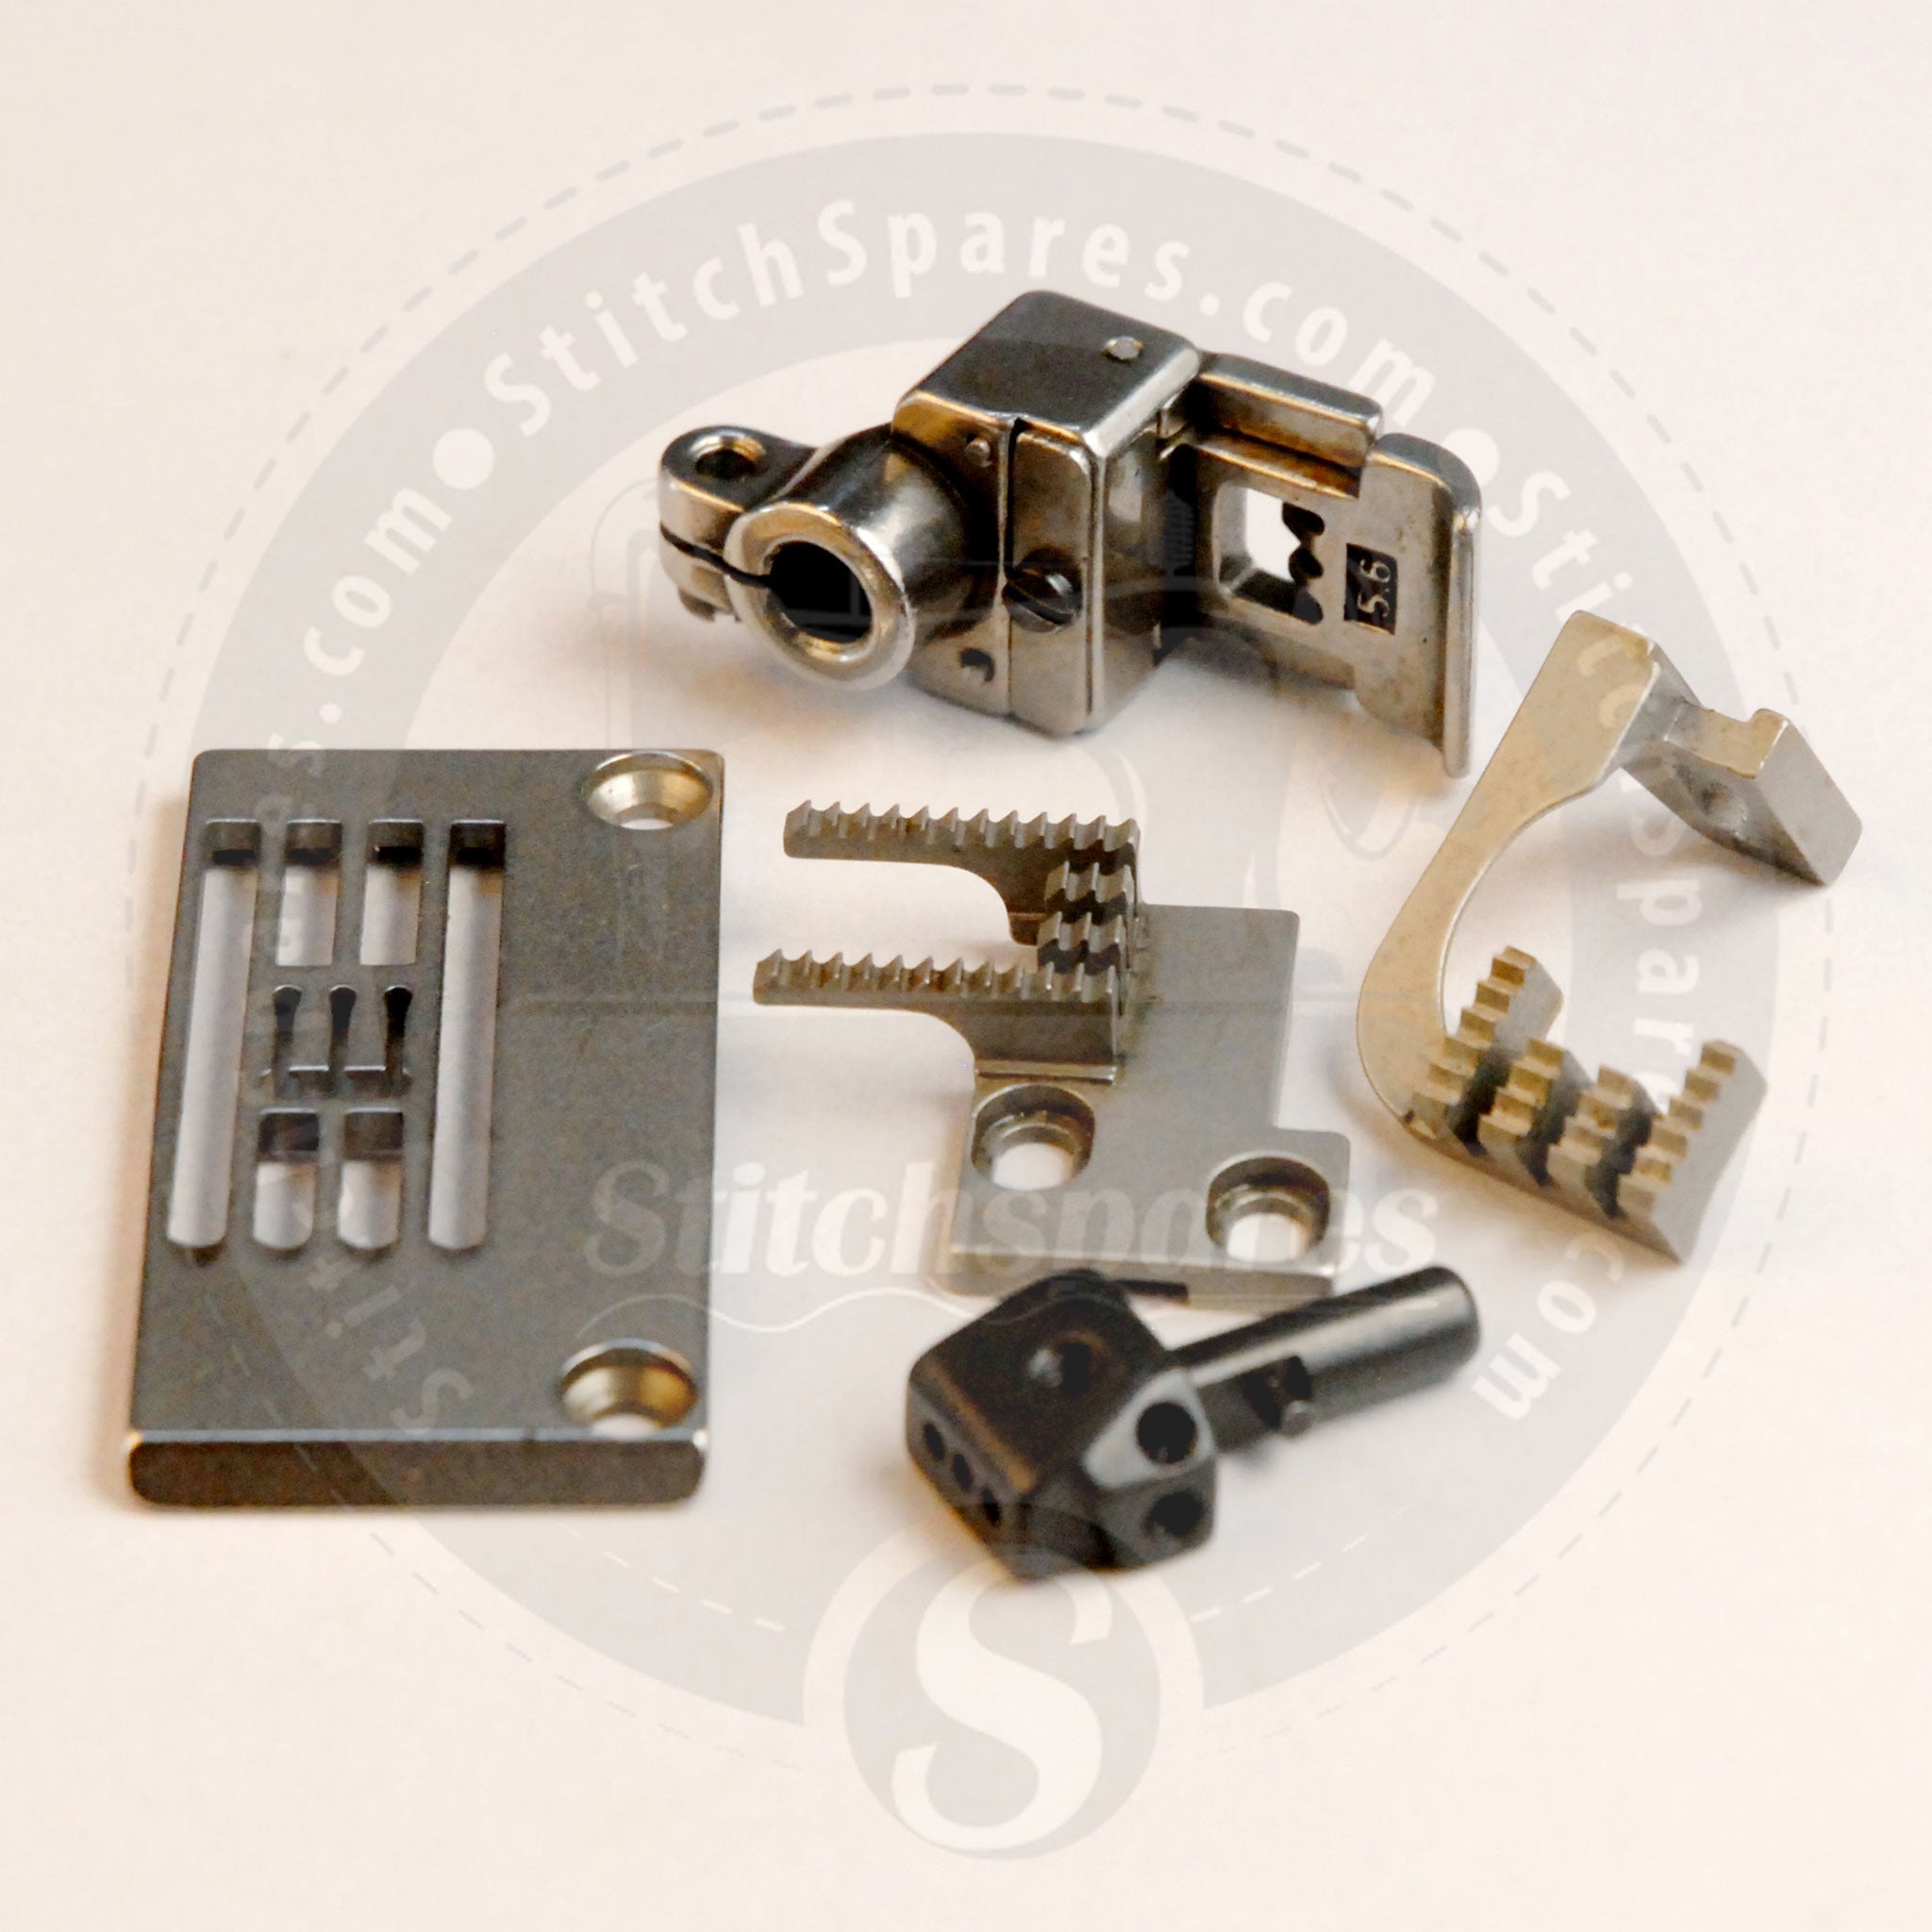 14-854 Gauge Set für Kansai Special Flatlock (Interlock) DVK1703D V7003D DWK1803D W8003D Industrienähmaschine